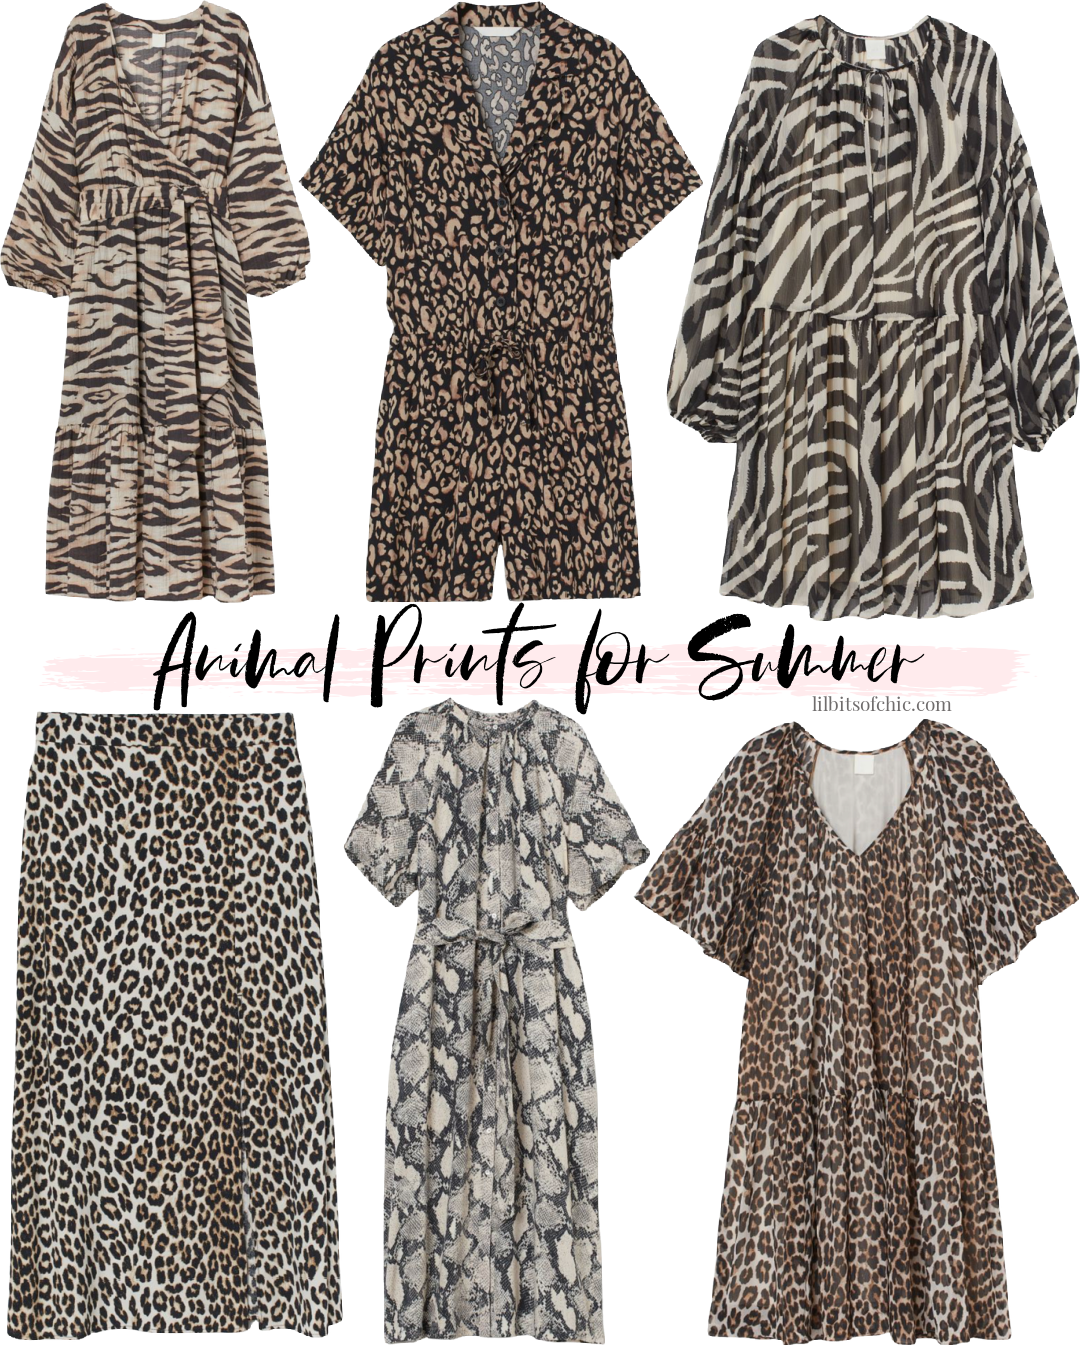 animal prints for summer, leopard dresses, zebra print dress